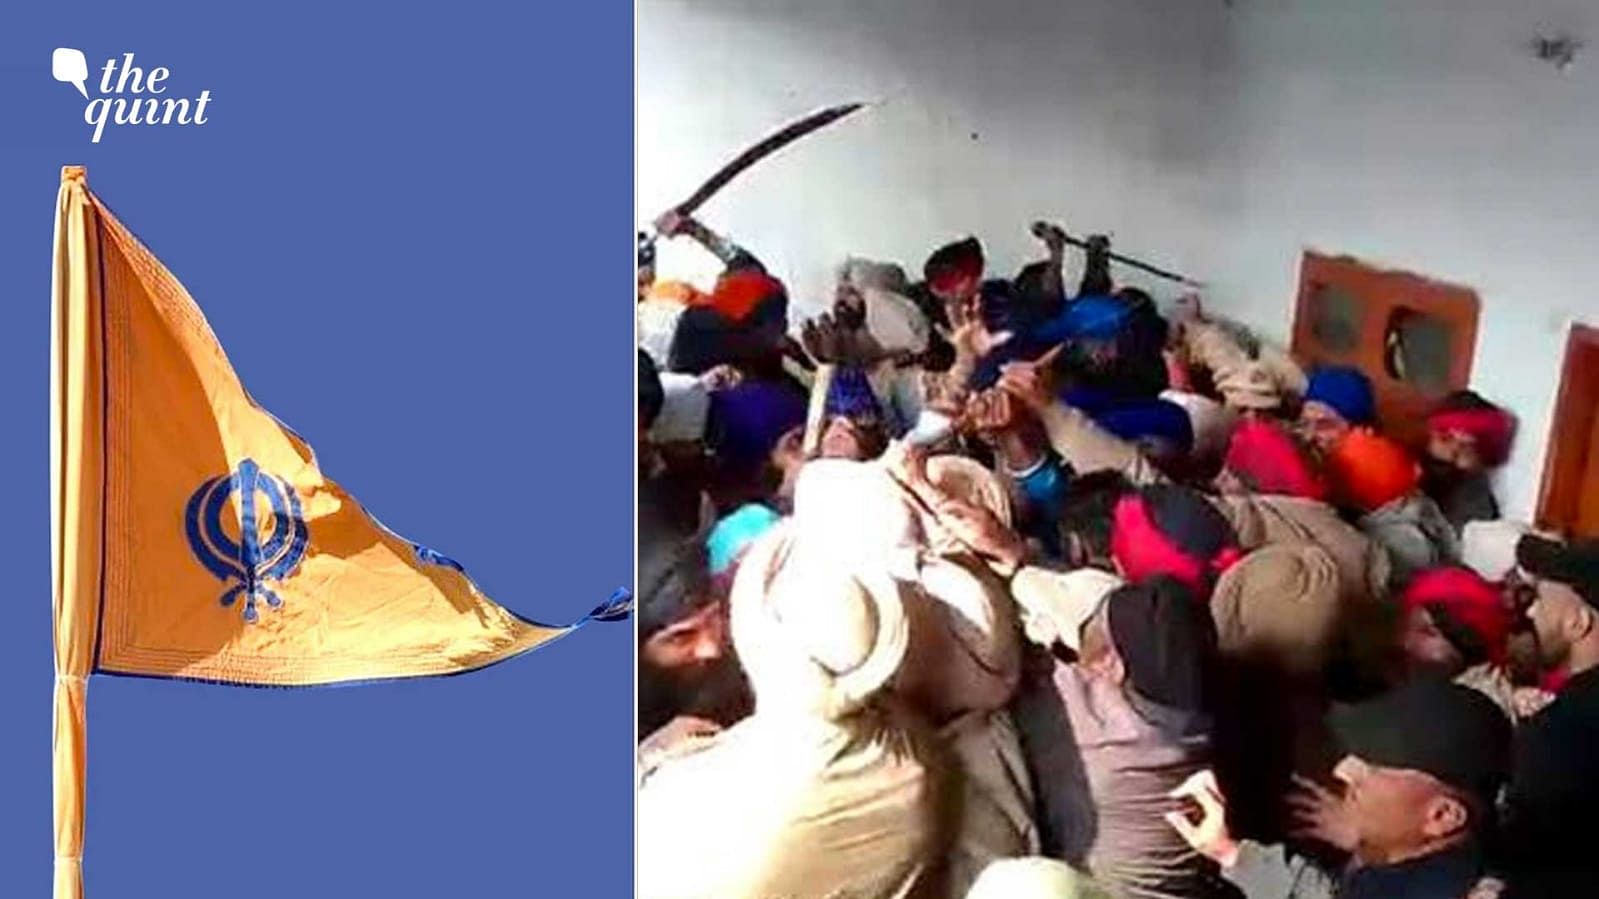 <div class="paragraphs"><p>Residents of Nijampur village in Kapurthala district allegedly saw the man disrespecting the Nishan Sahib (the Sikh flag) at the village Gurudwara around 4 am.</p></div>